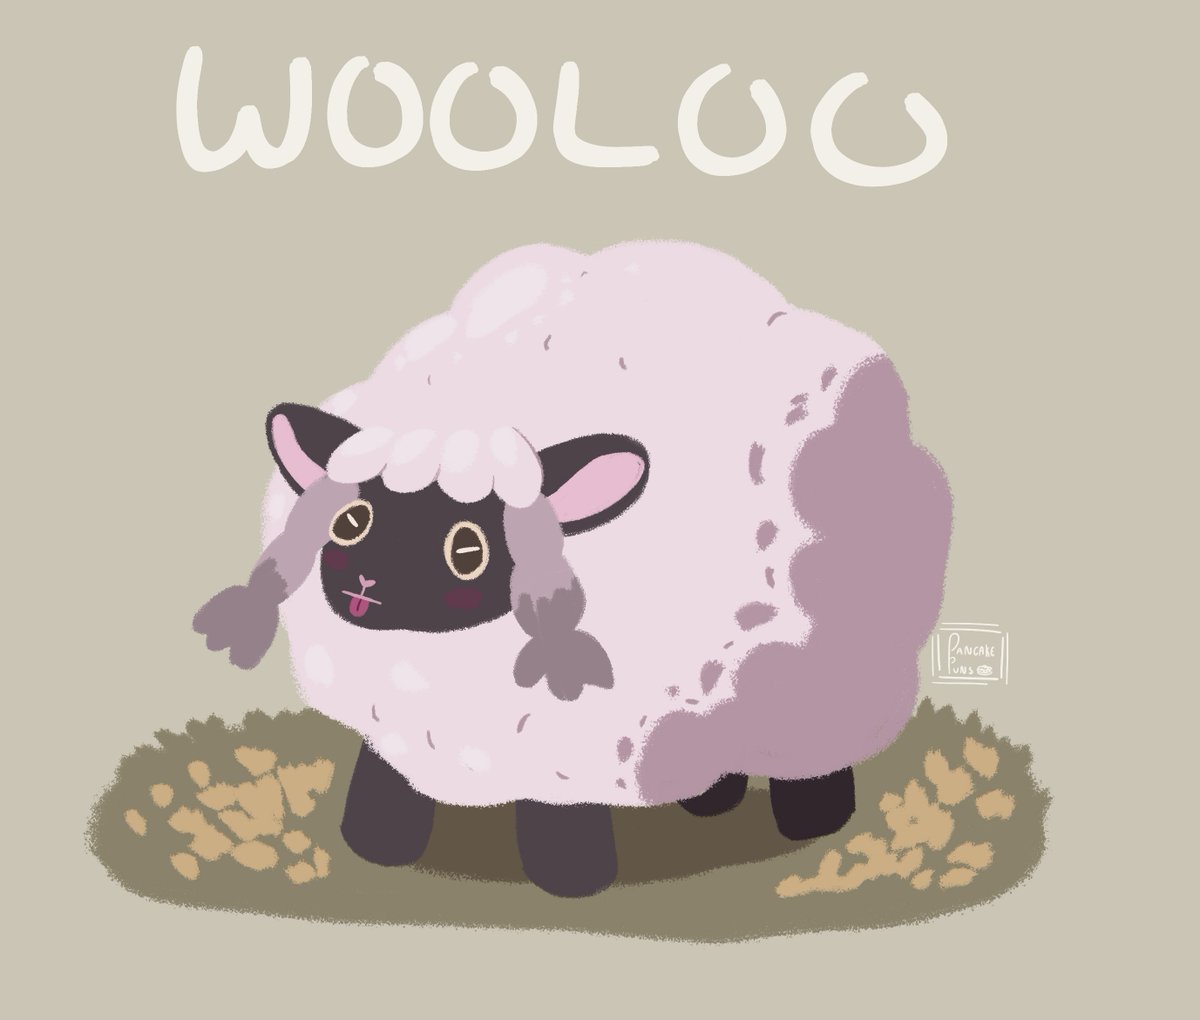 I absolutely LOVE this cute dumb sheep, give me 10.
#wooloo #PokemonSwordShield #galarregion #fanart